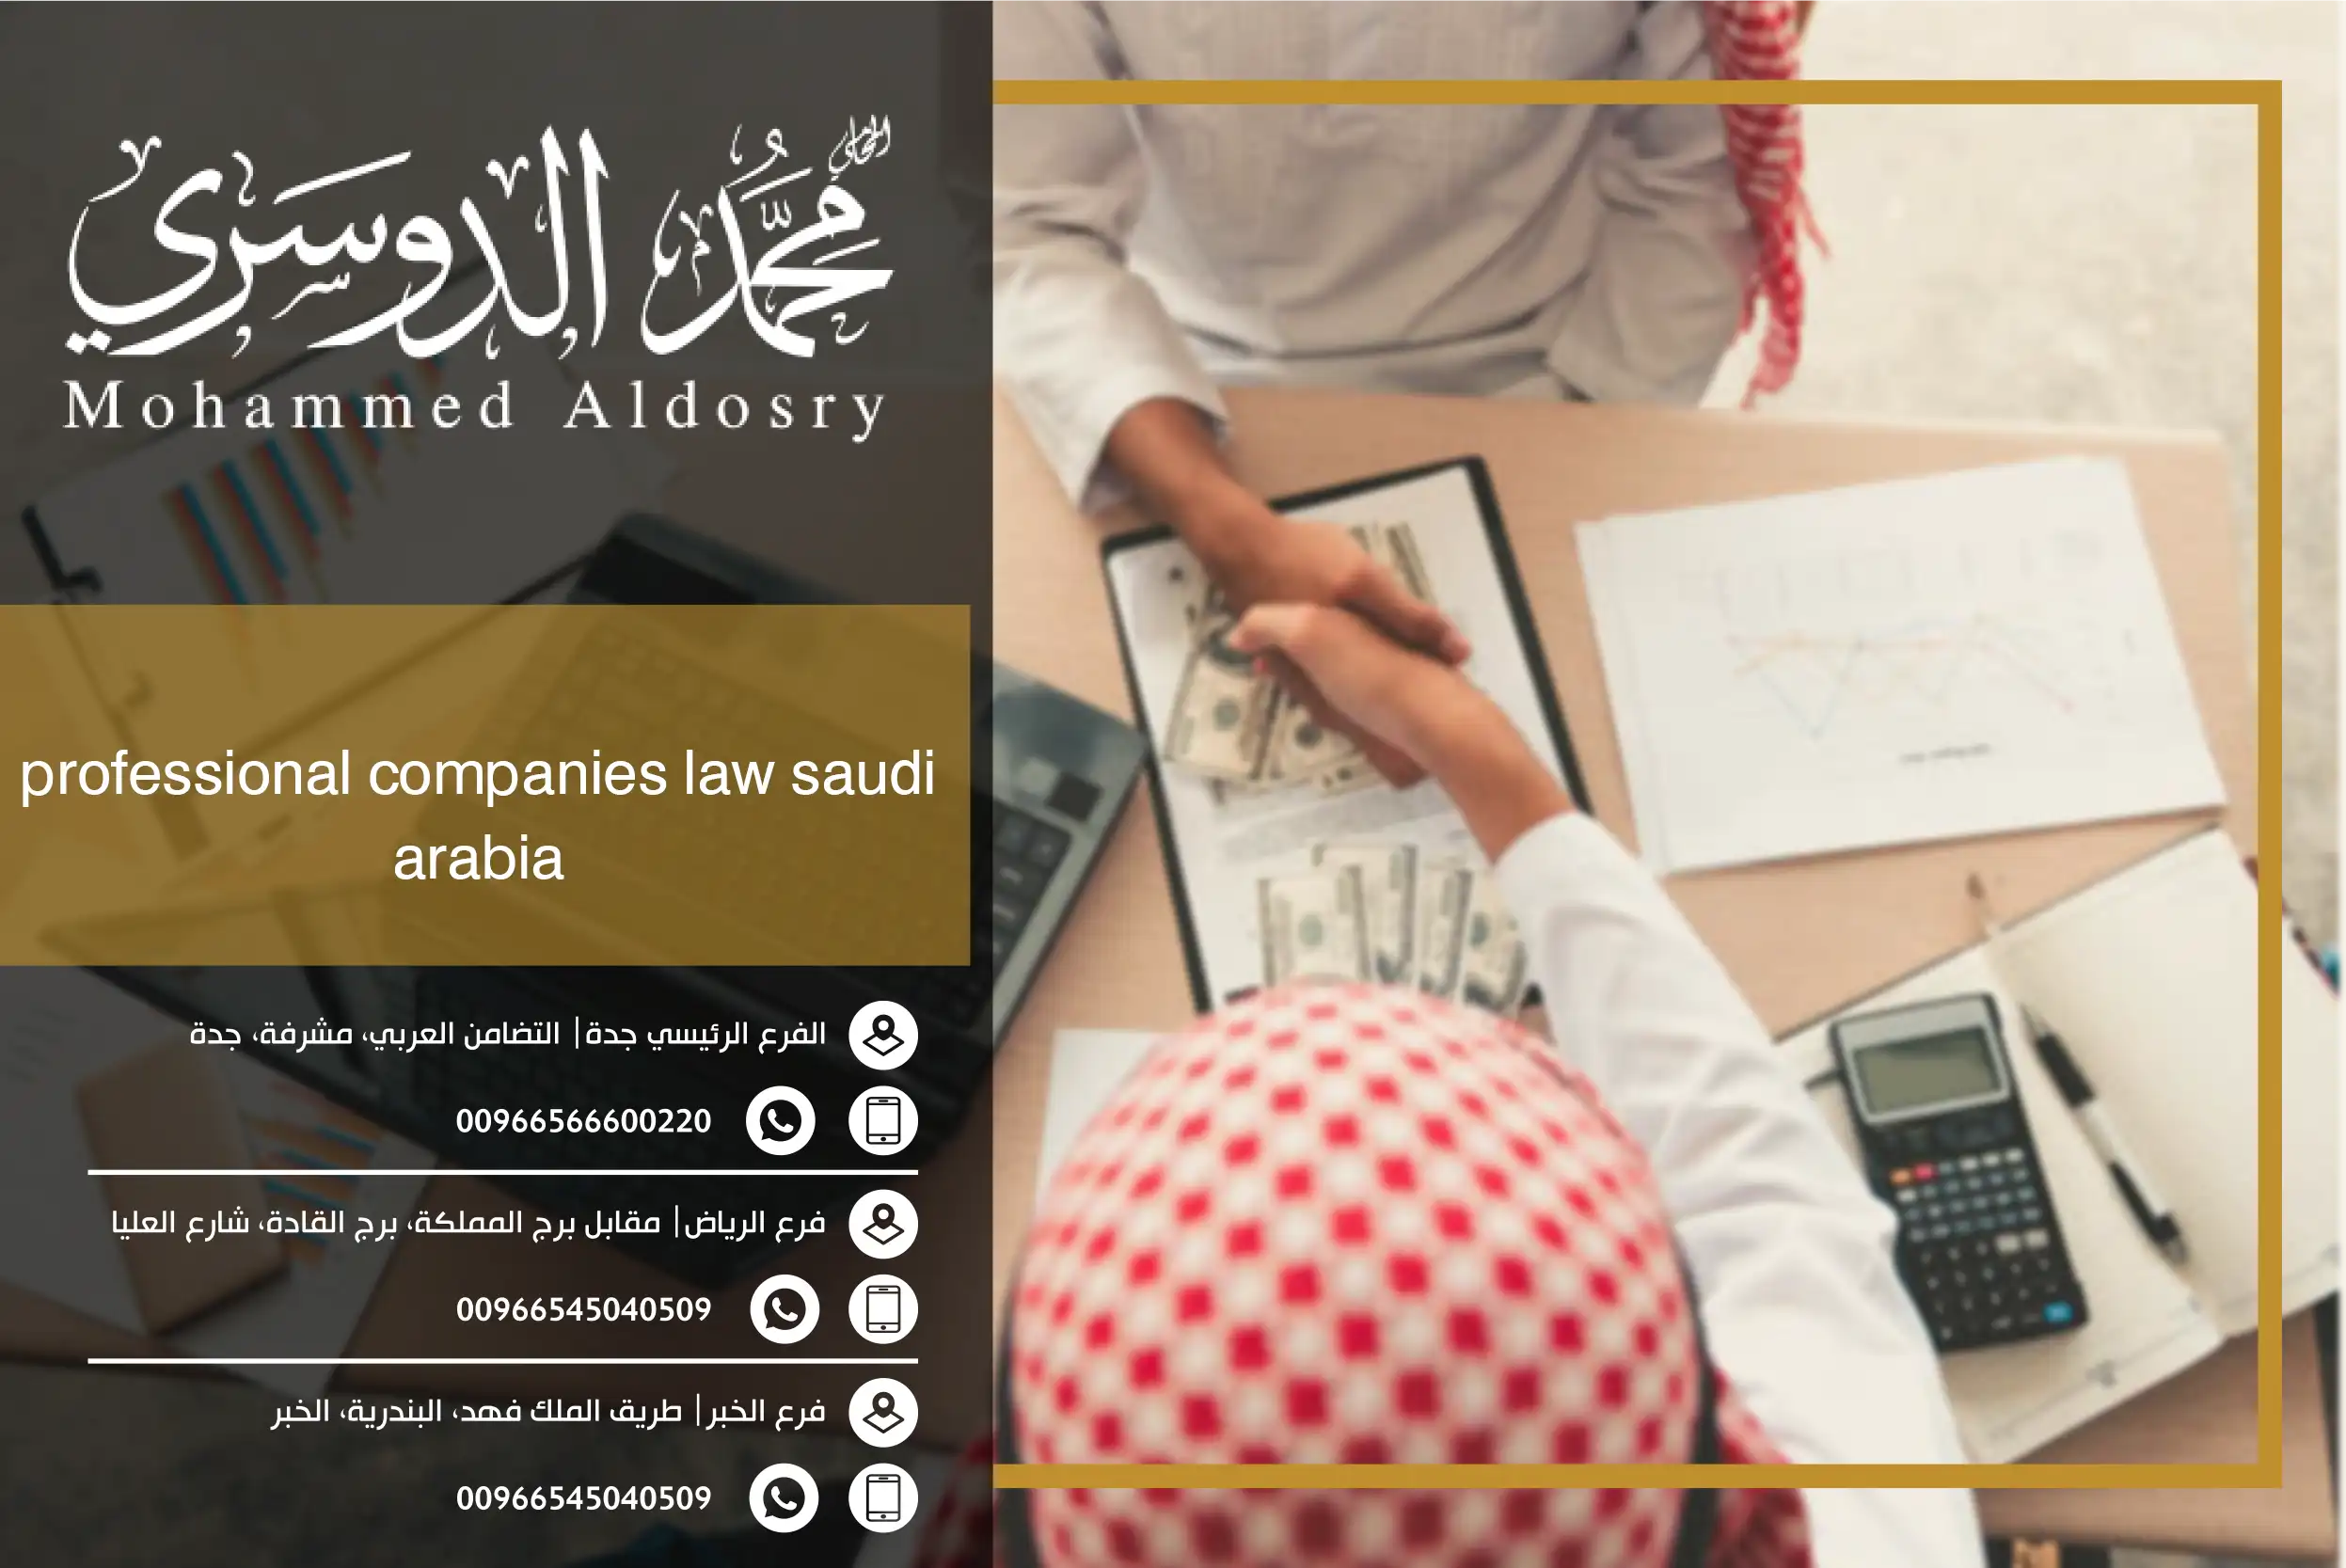 professional companies law saudi arabia